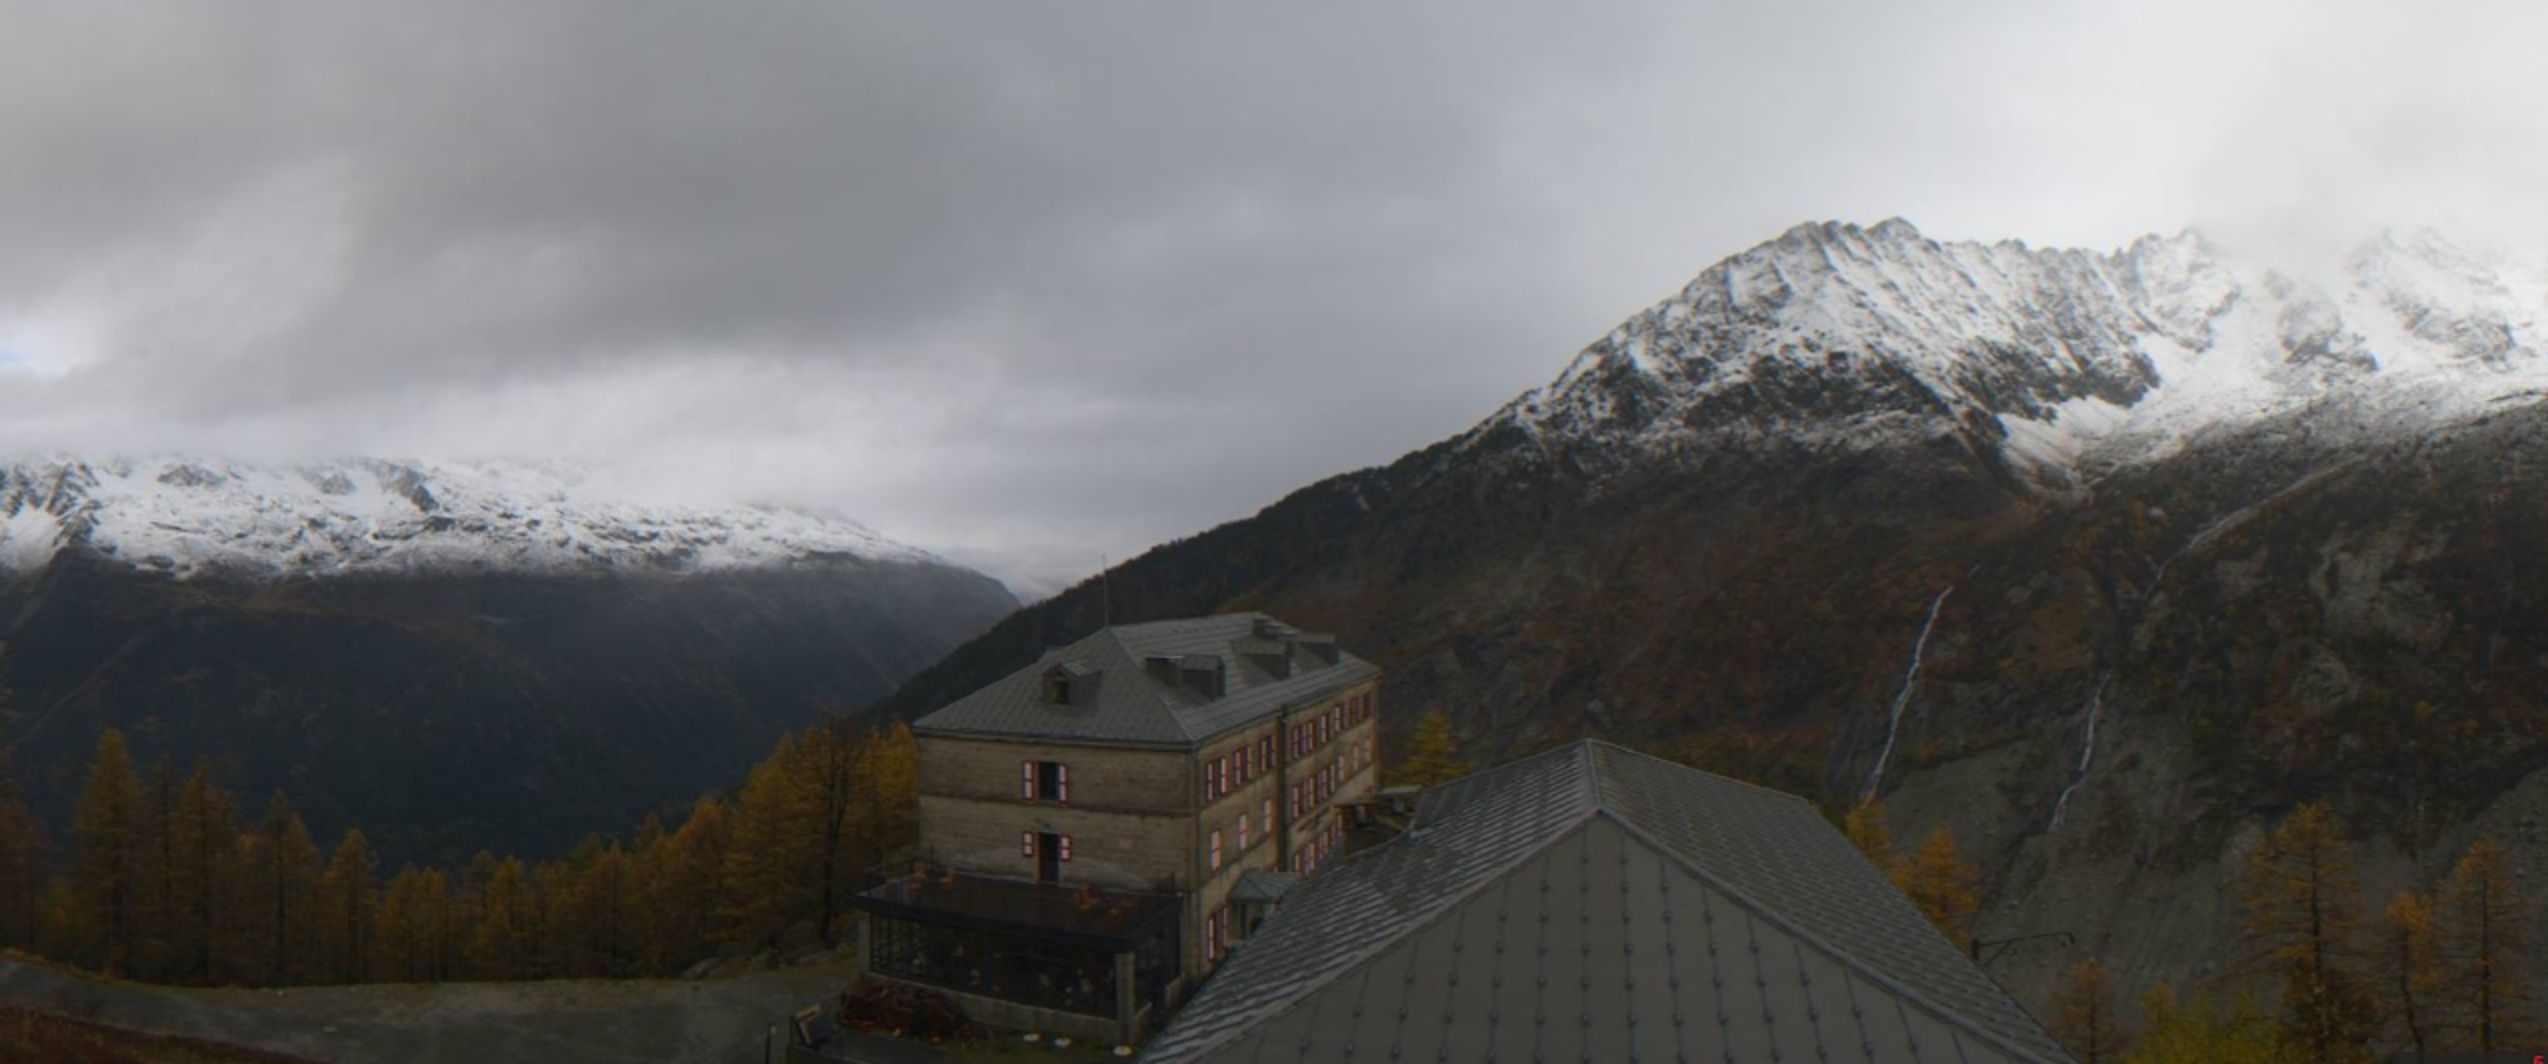 High snow line in Chamonix